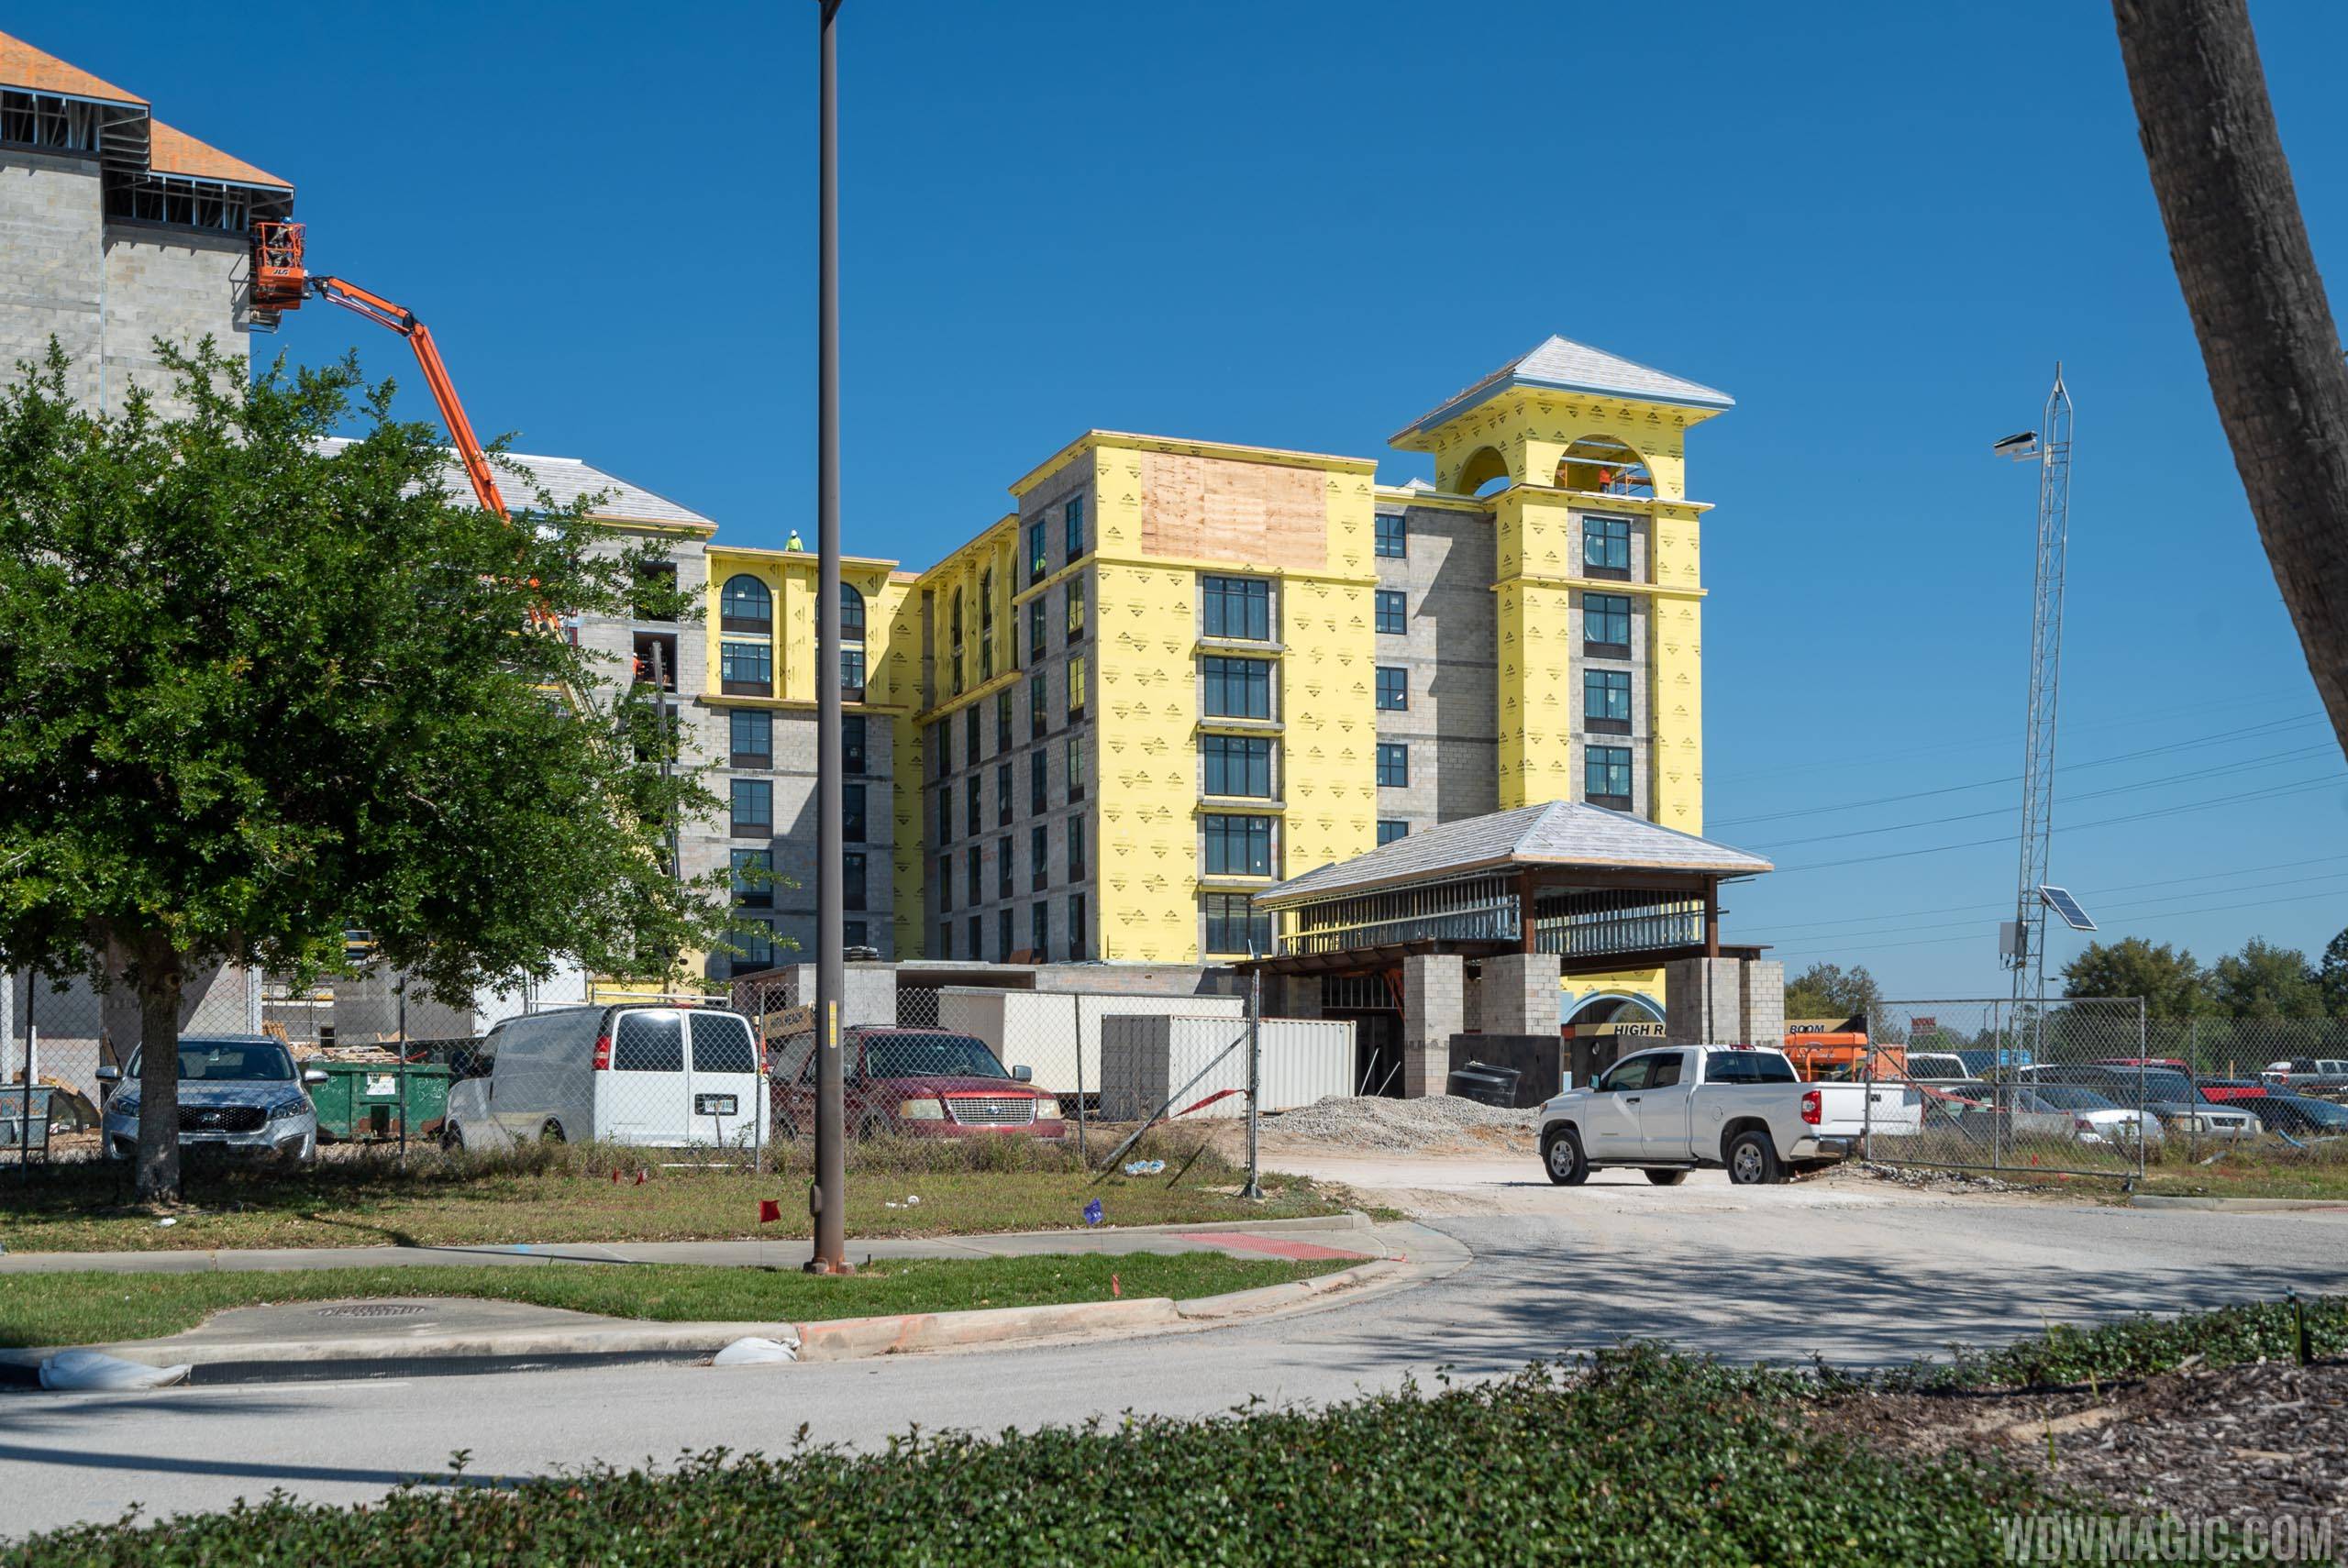 Flamingo Crossings Hotel construction - March 1 2020